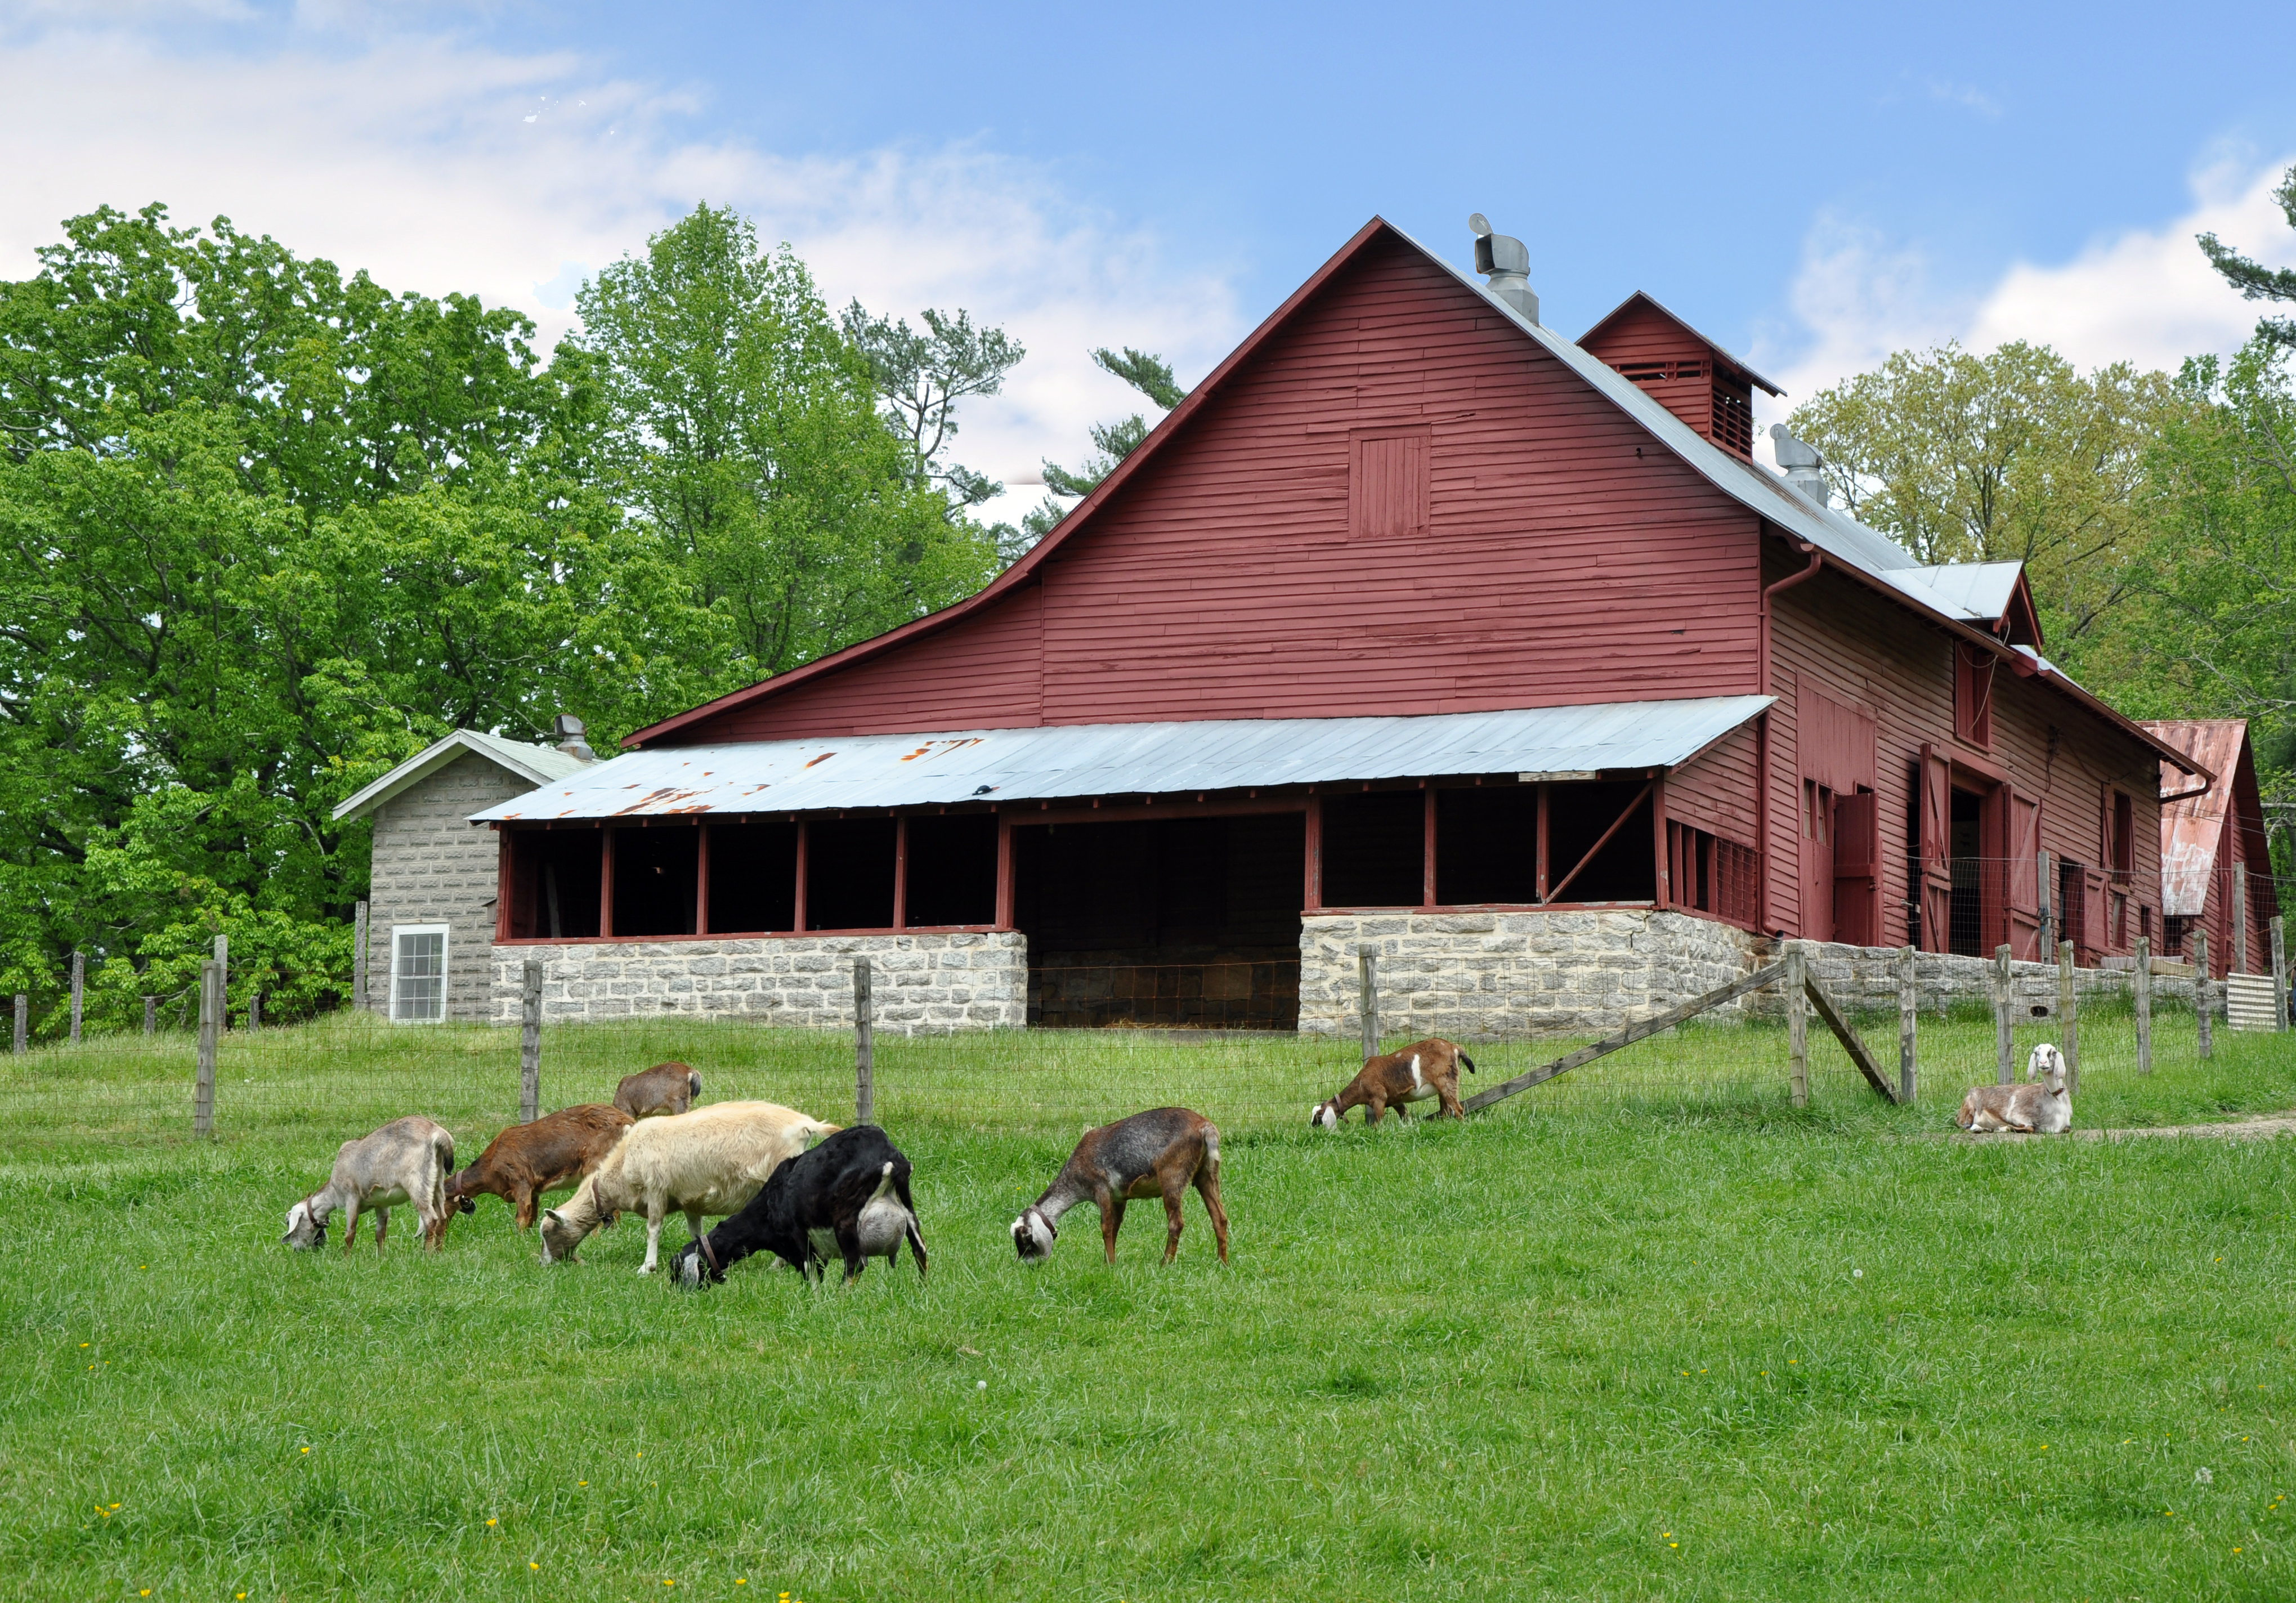 Dairy goats graze peacefully near the Sandburg barn